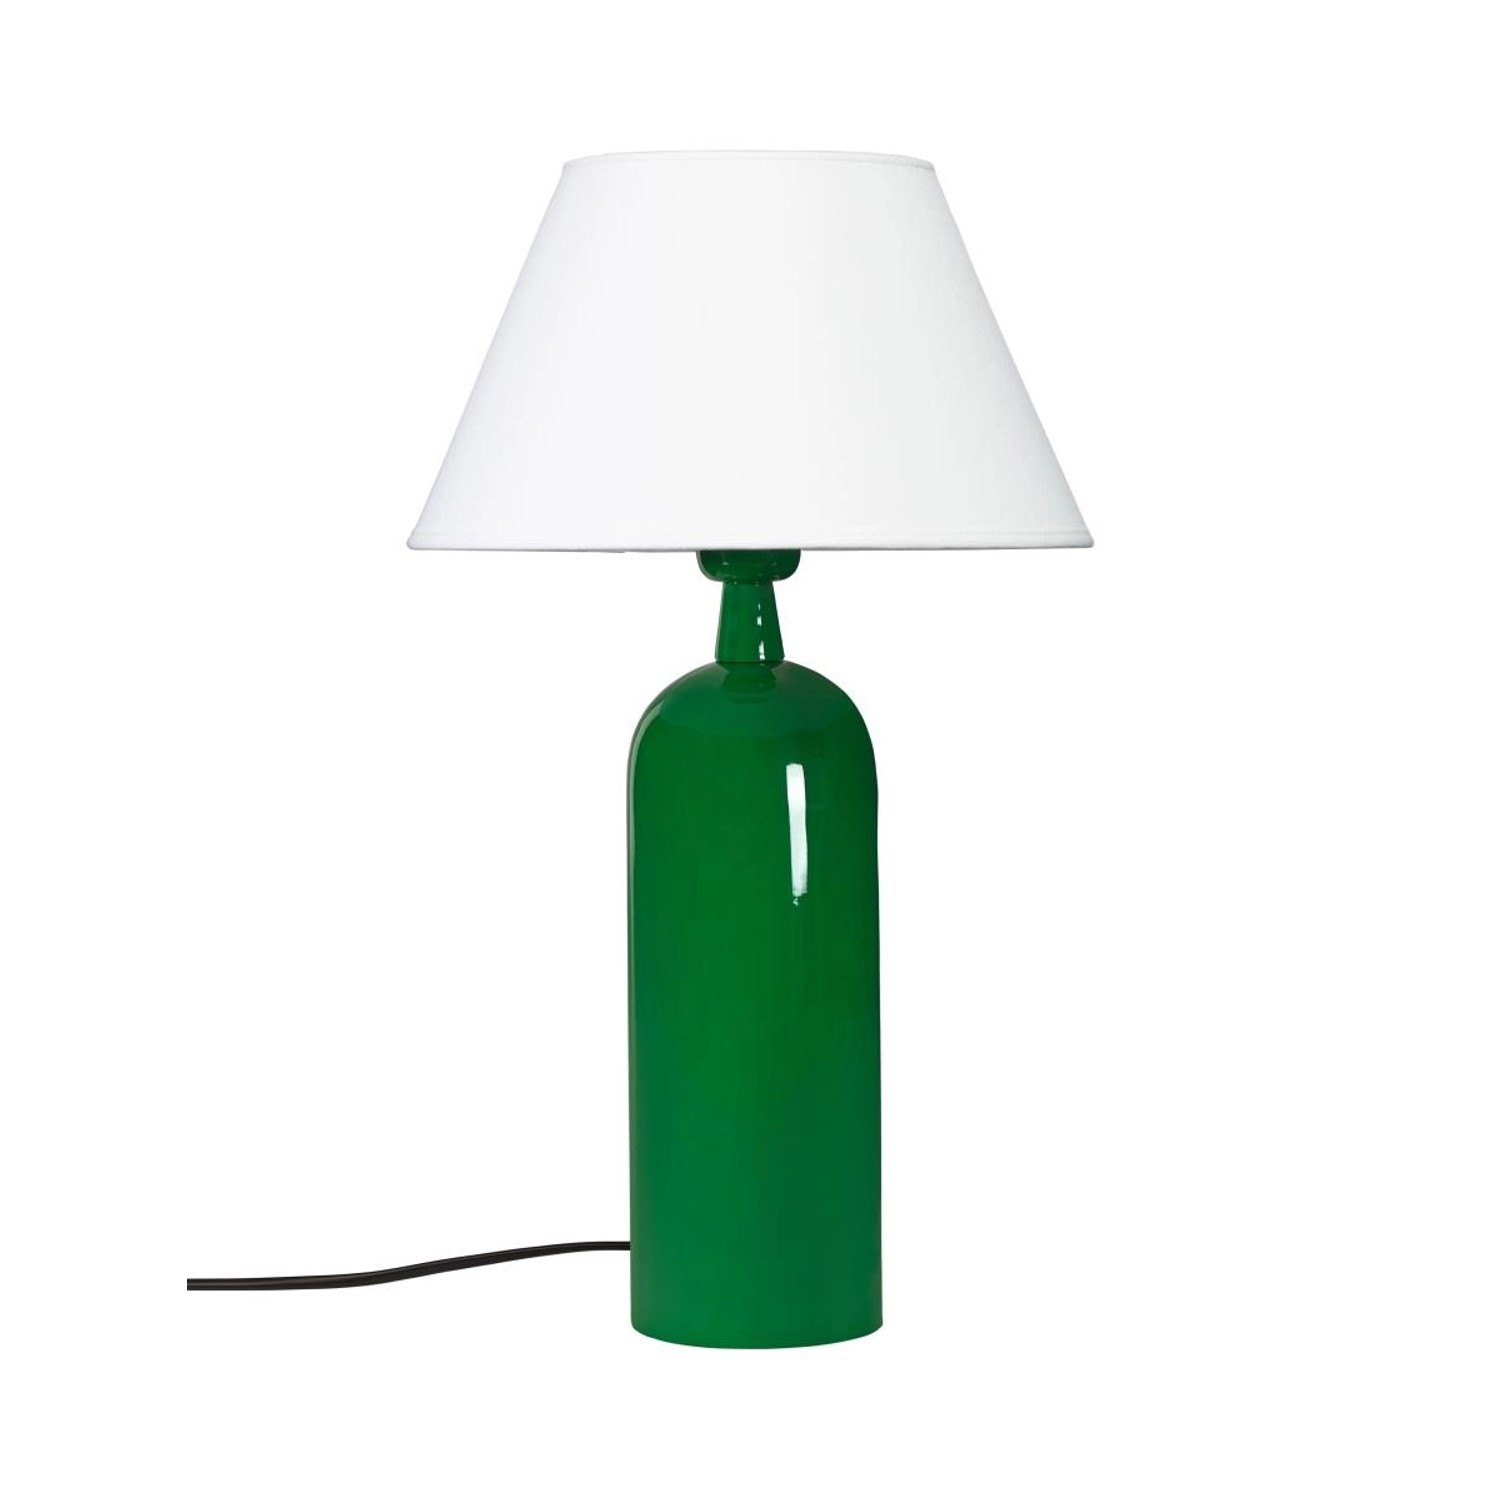 PR Home Carter Textil Tischlampe Grün, Weiß E27 46cm